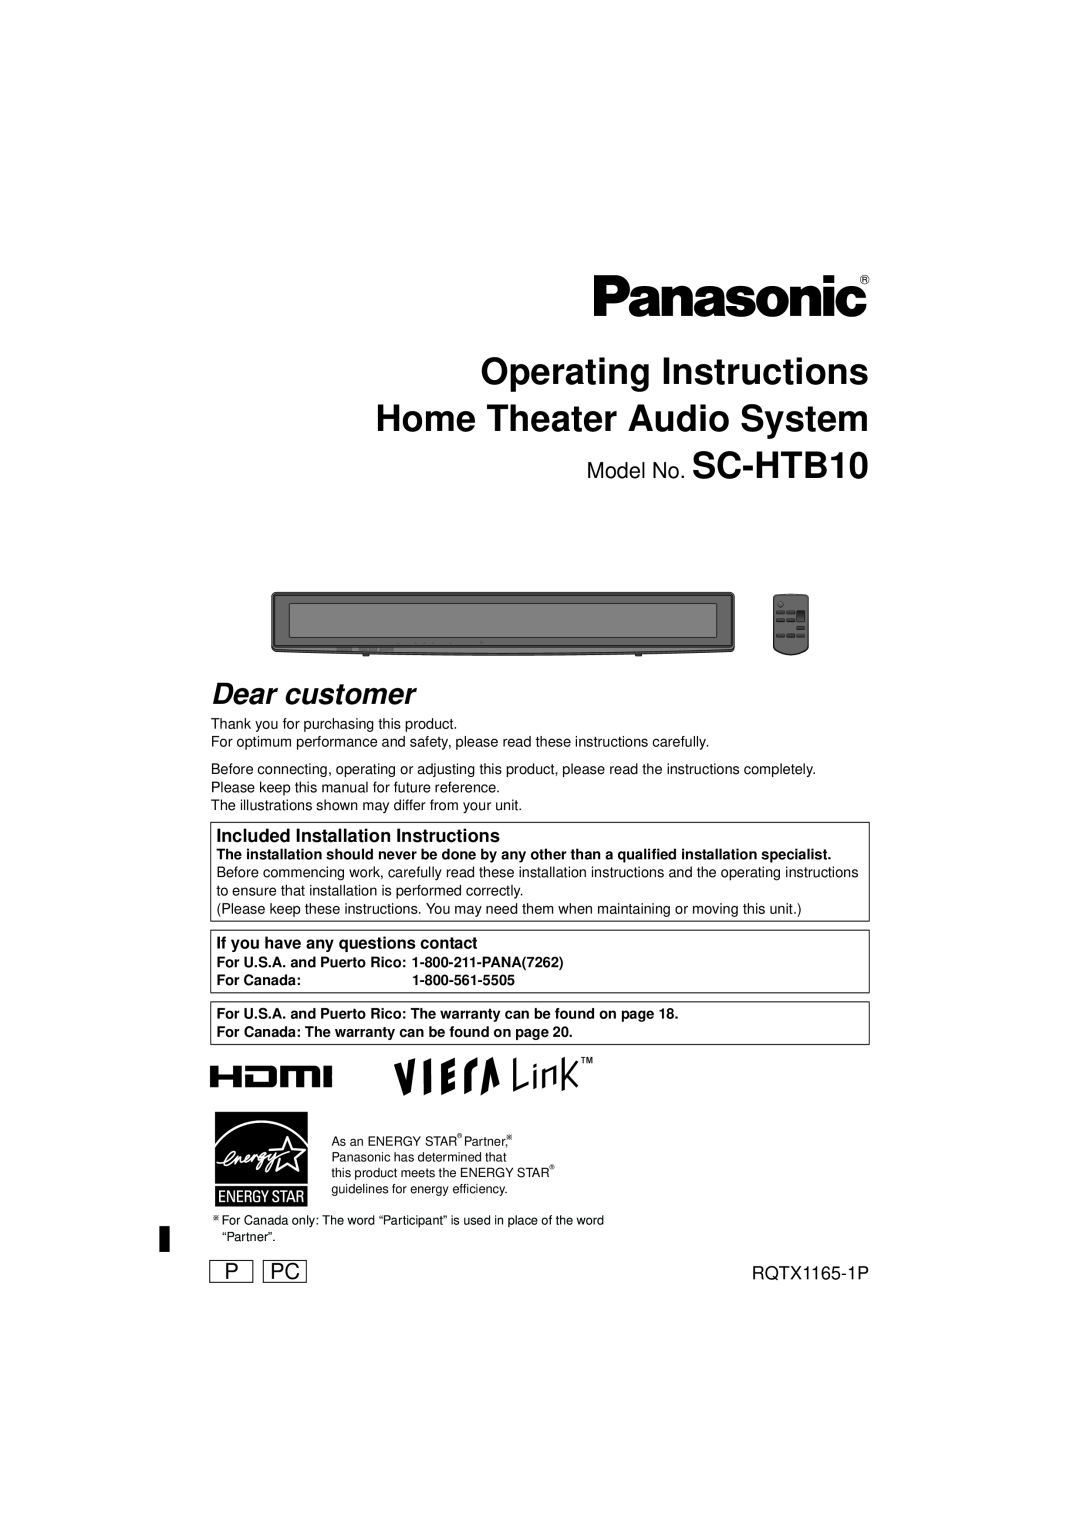 Panasonic RQTX1165-1P operating instructions Model No. SC-HTB10, Operating Instructions Home Theater Audio System, P Pc 